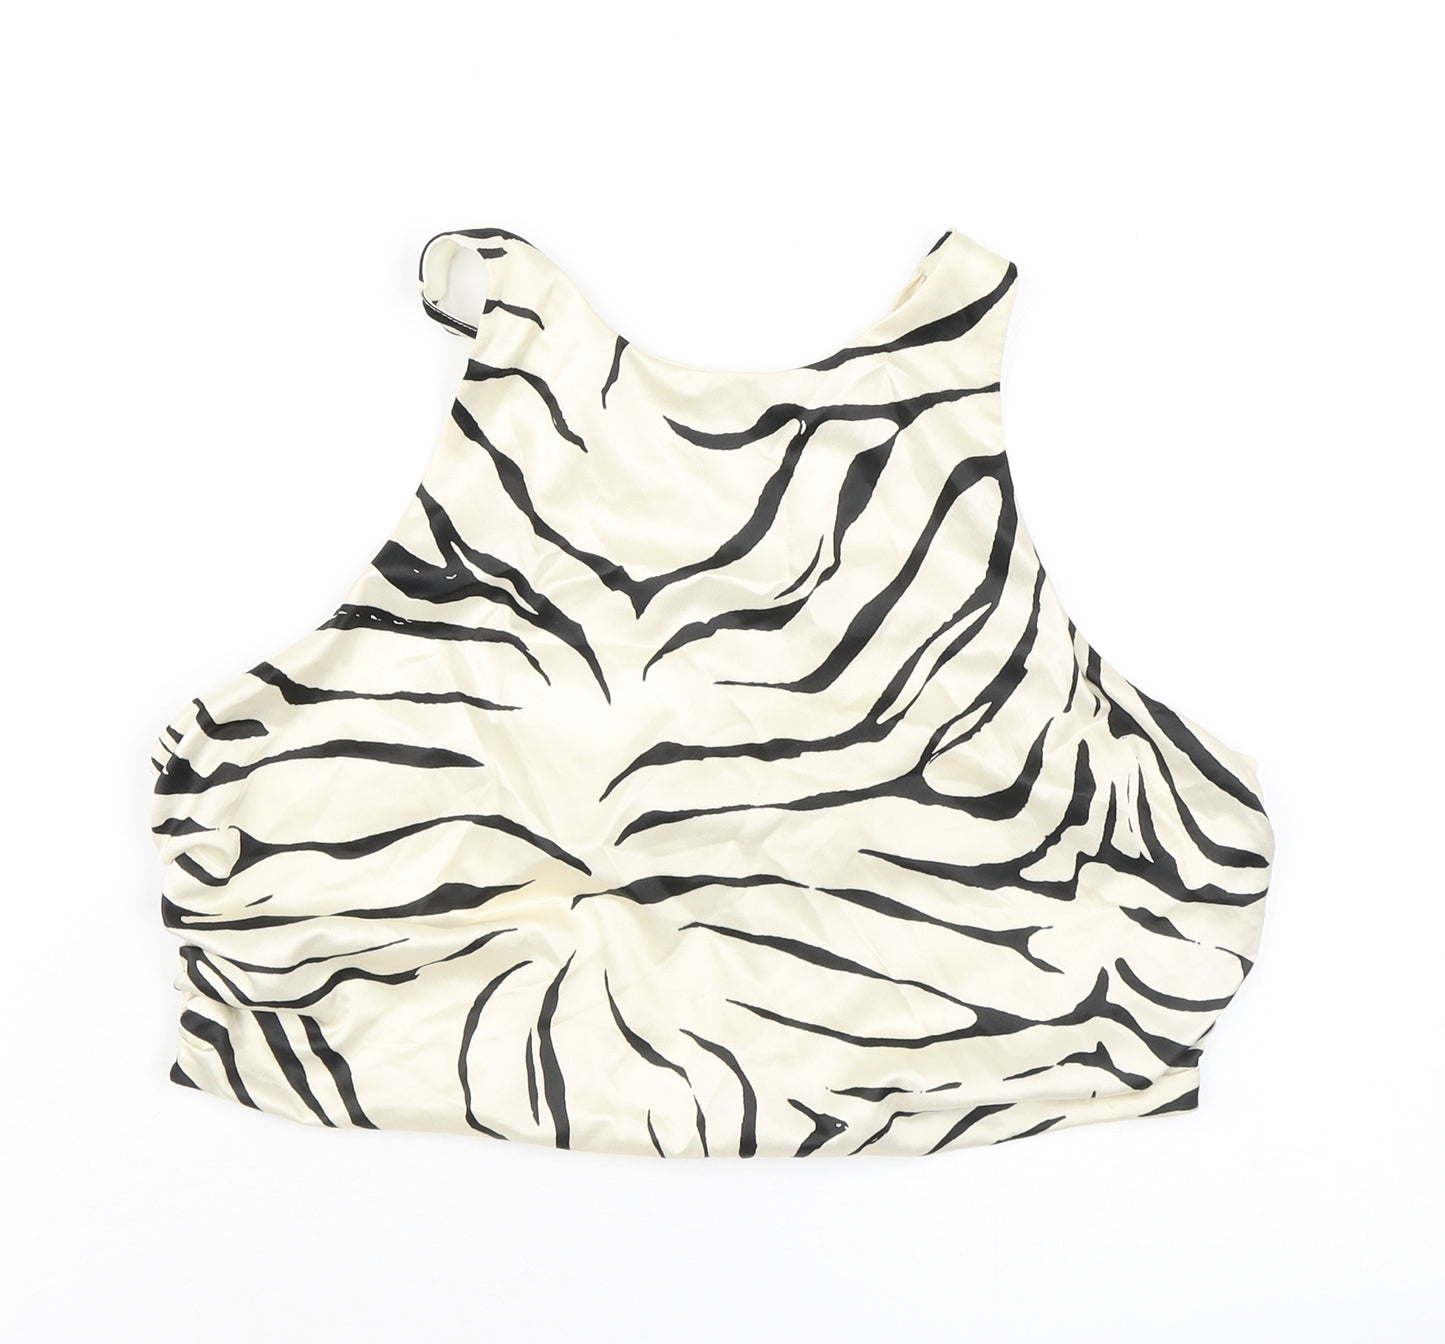 Zara Womens Beige Animal Print Polyester Cropped Blouse Size L Halter - Zebra Print